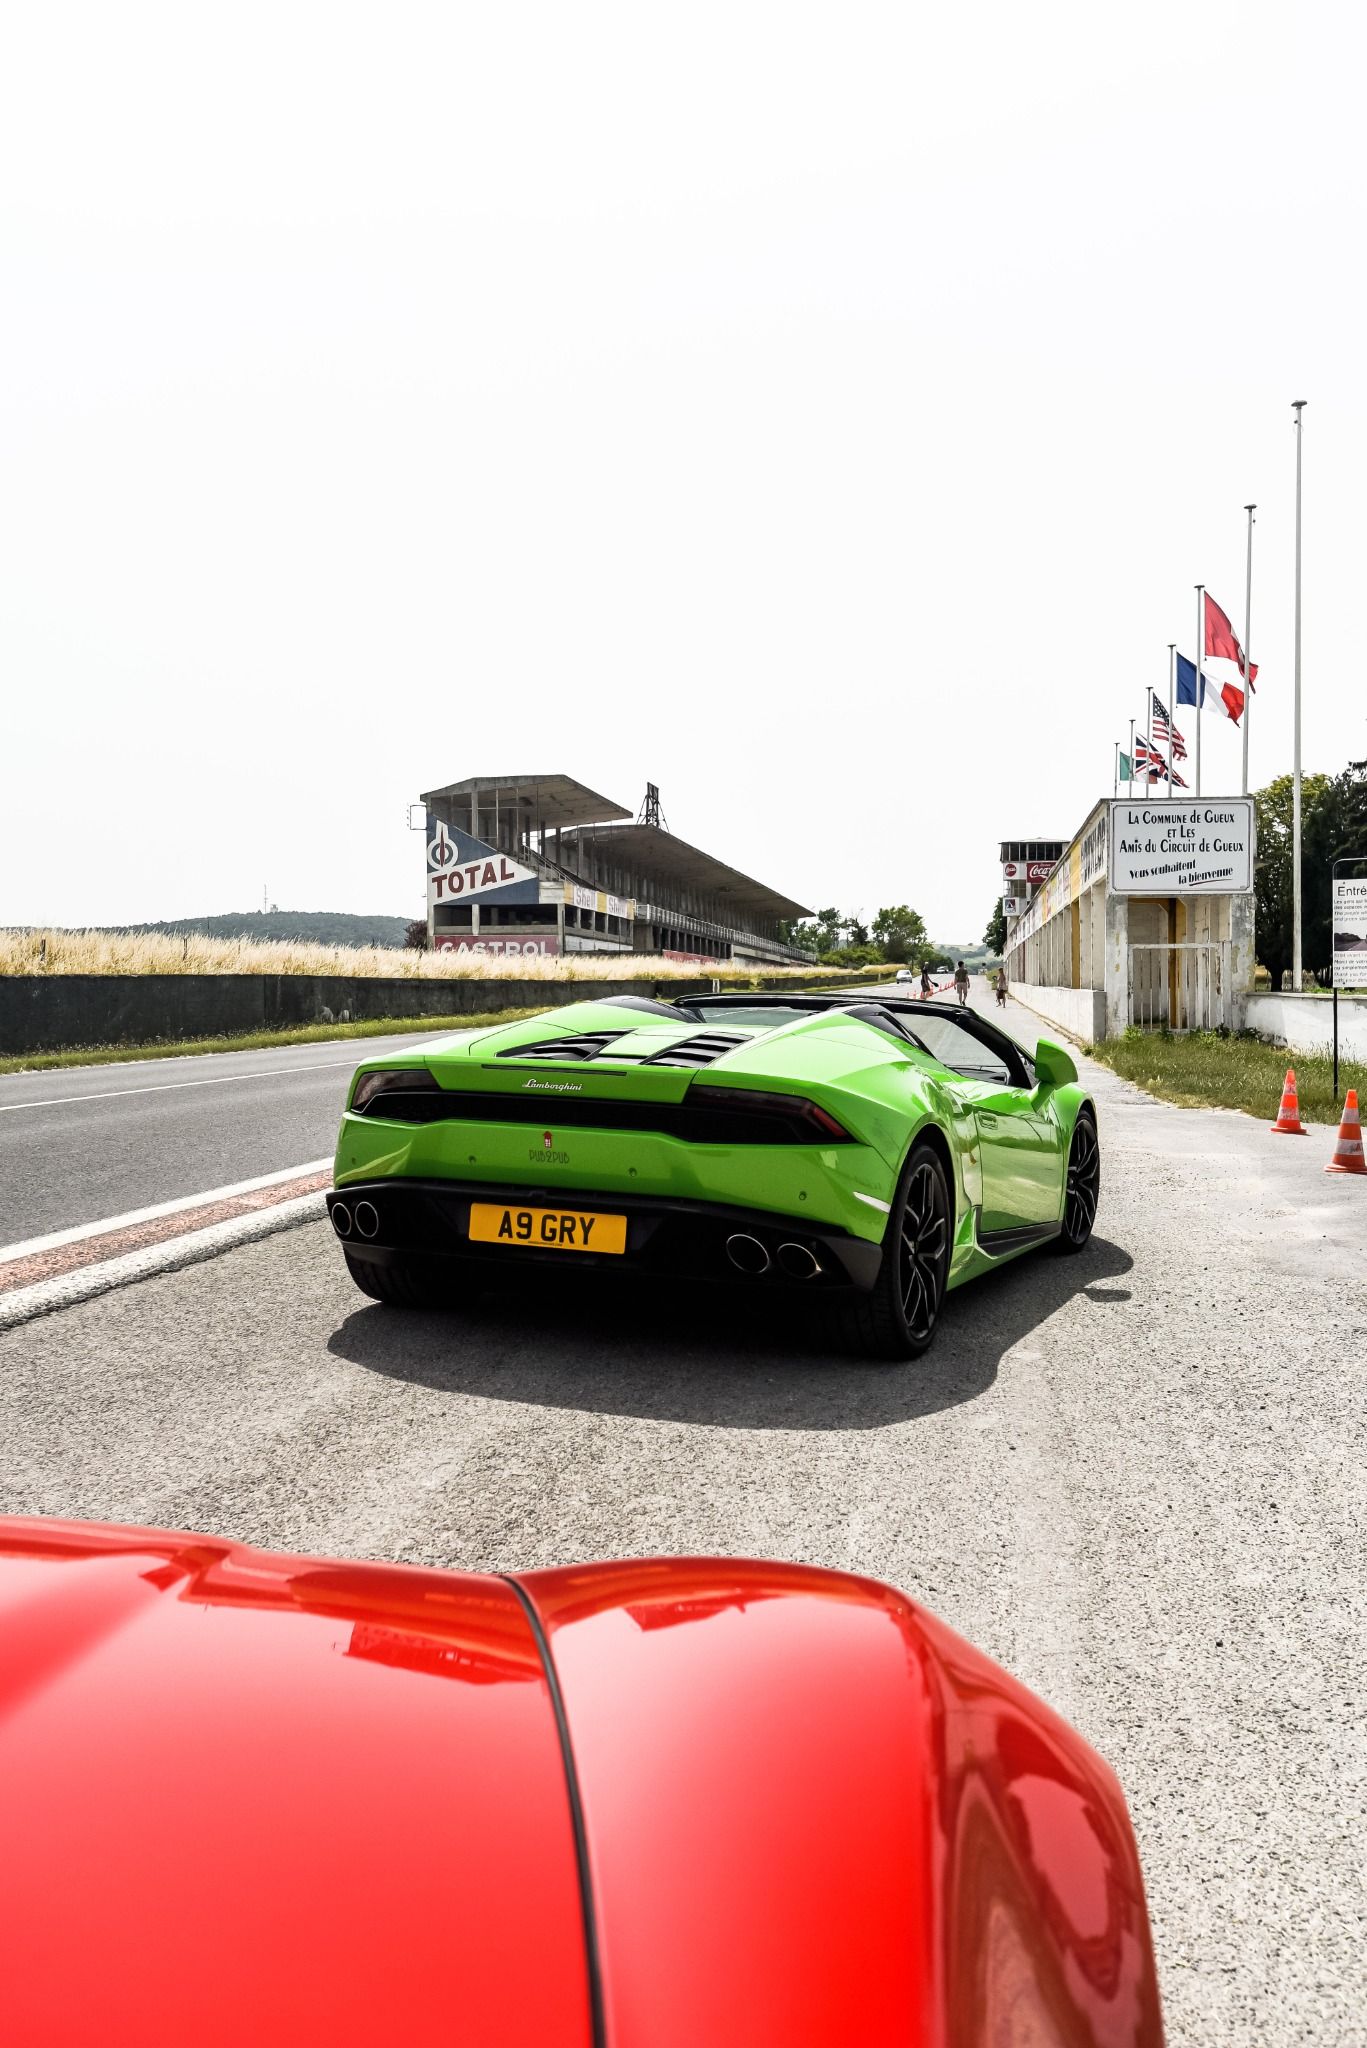 Rear angle on a green Lamborghini on a racing track